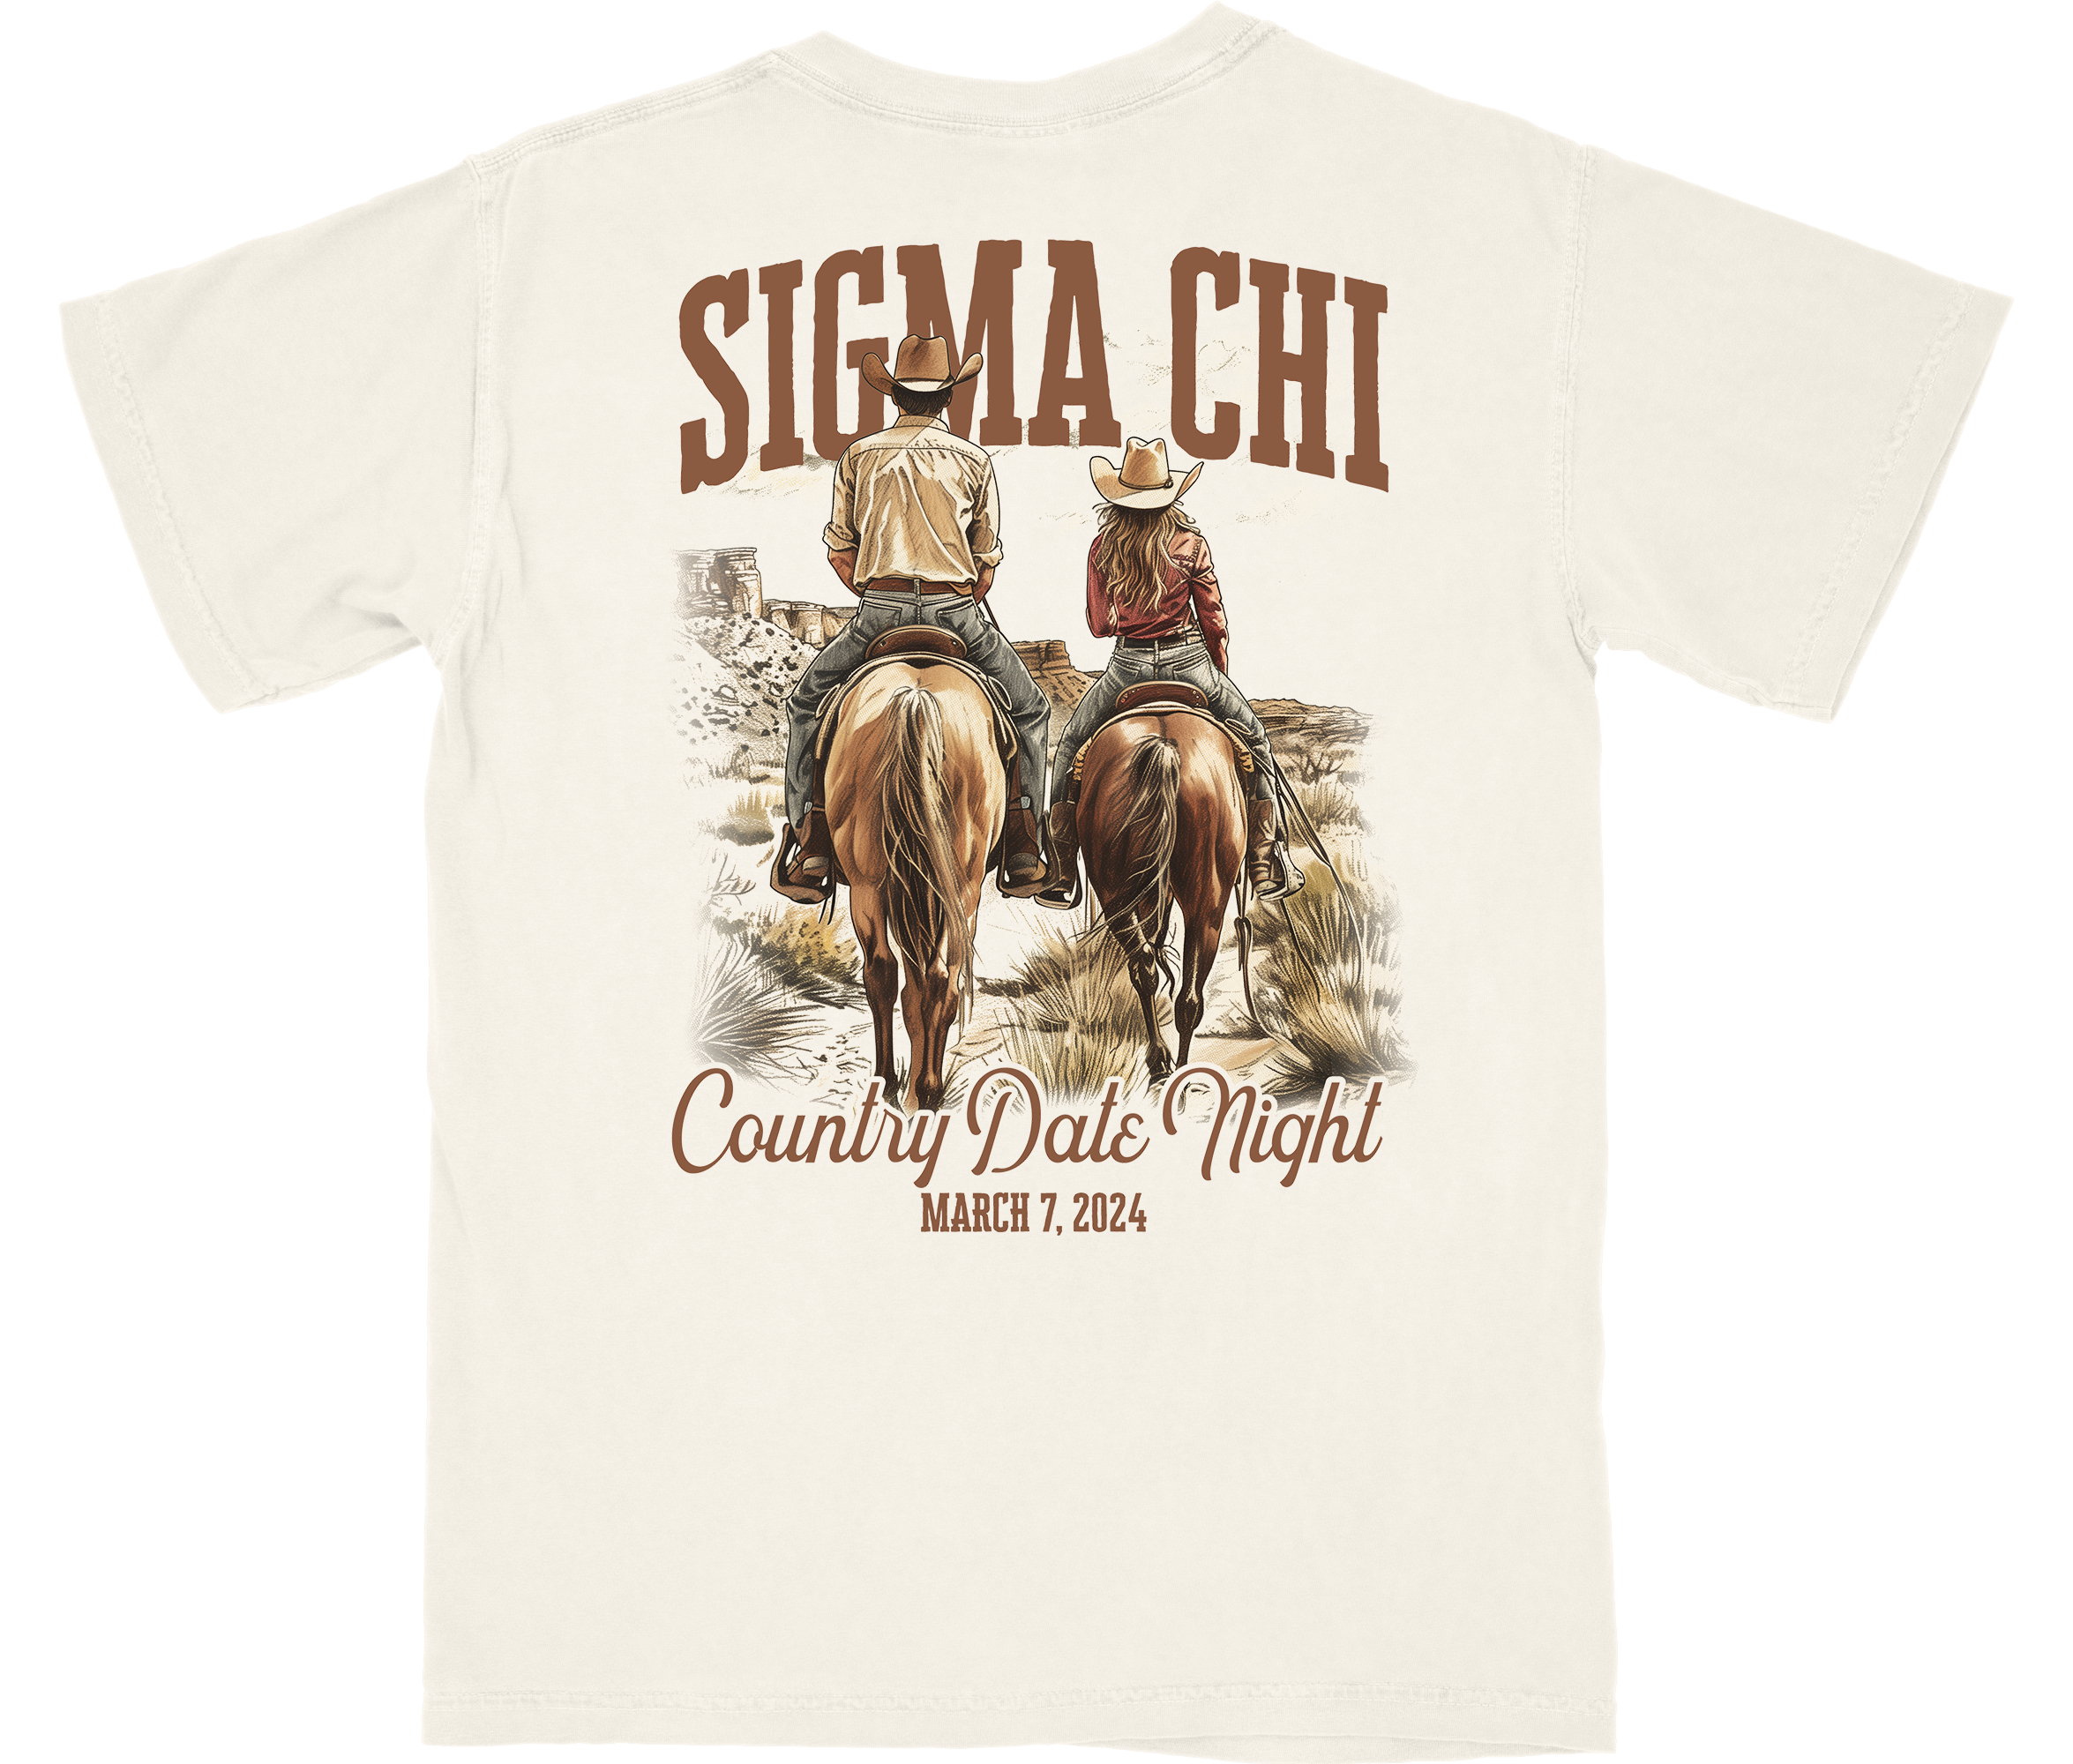 Country Date Night '24 Shirt